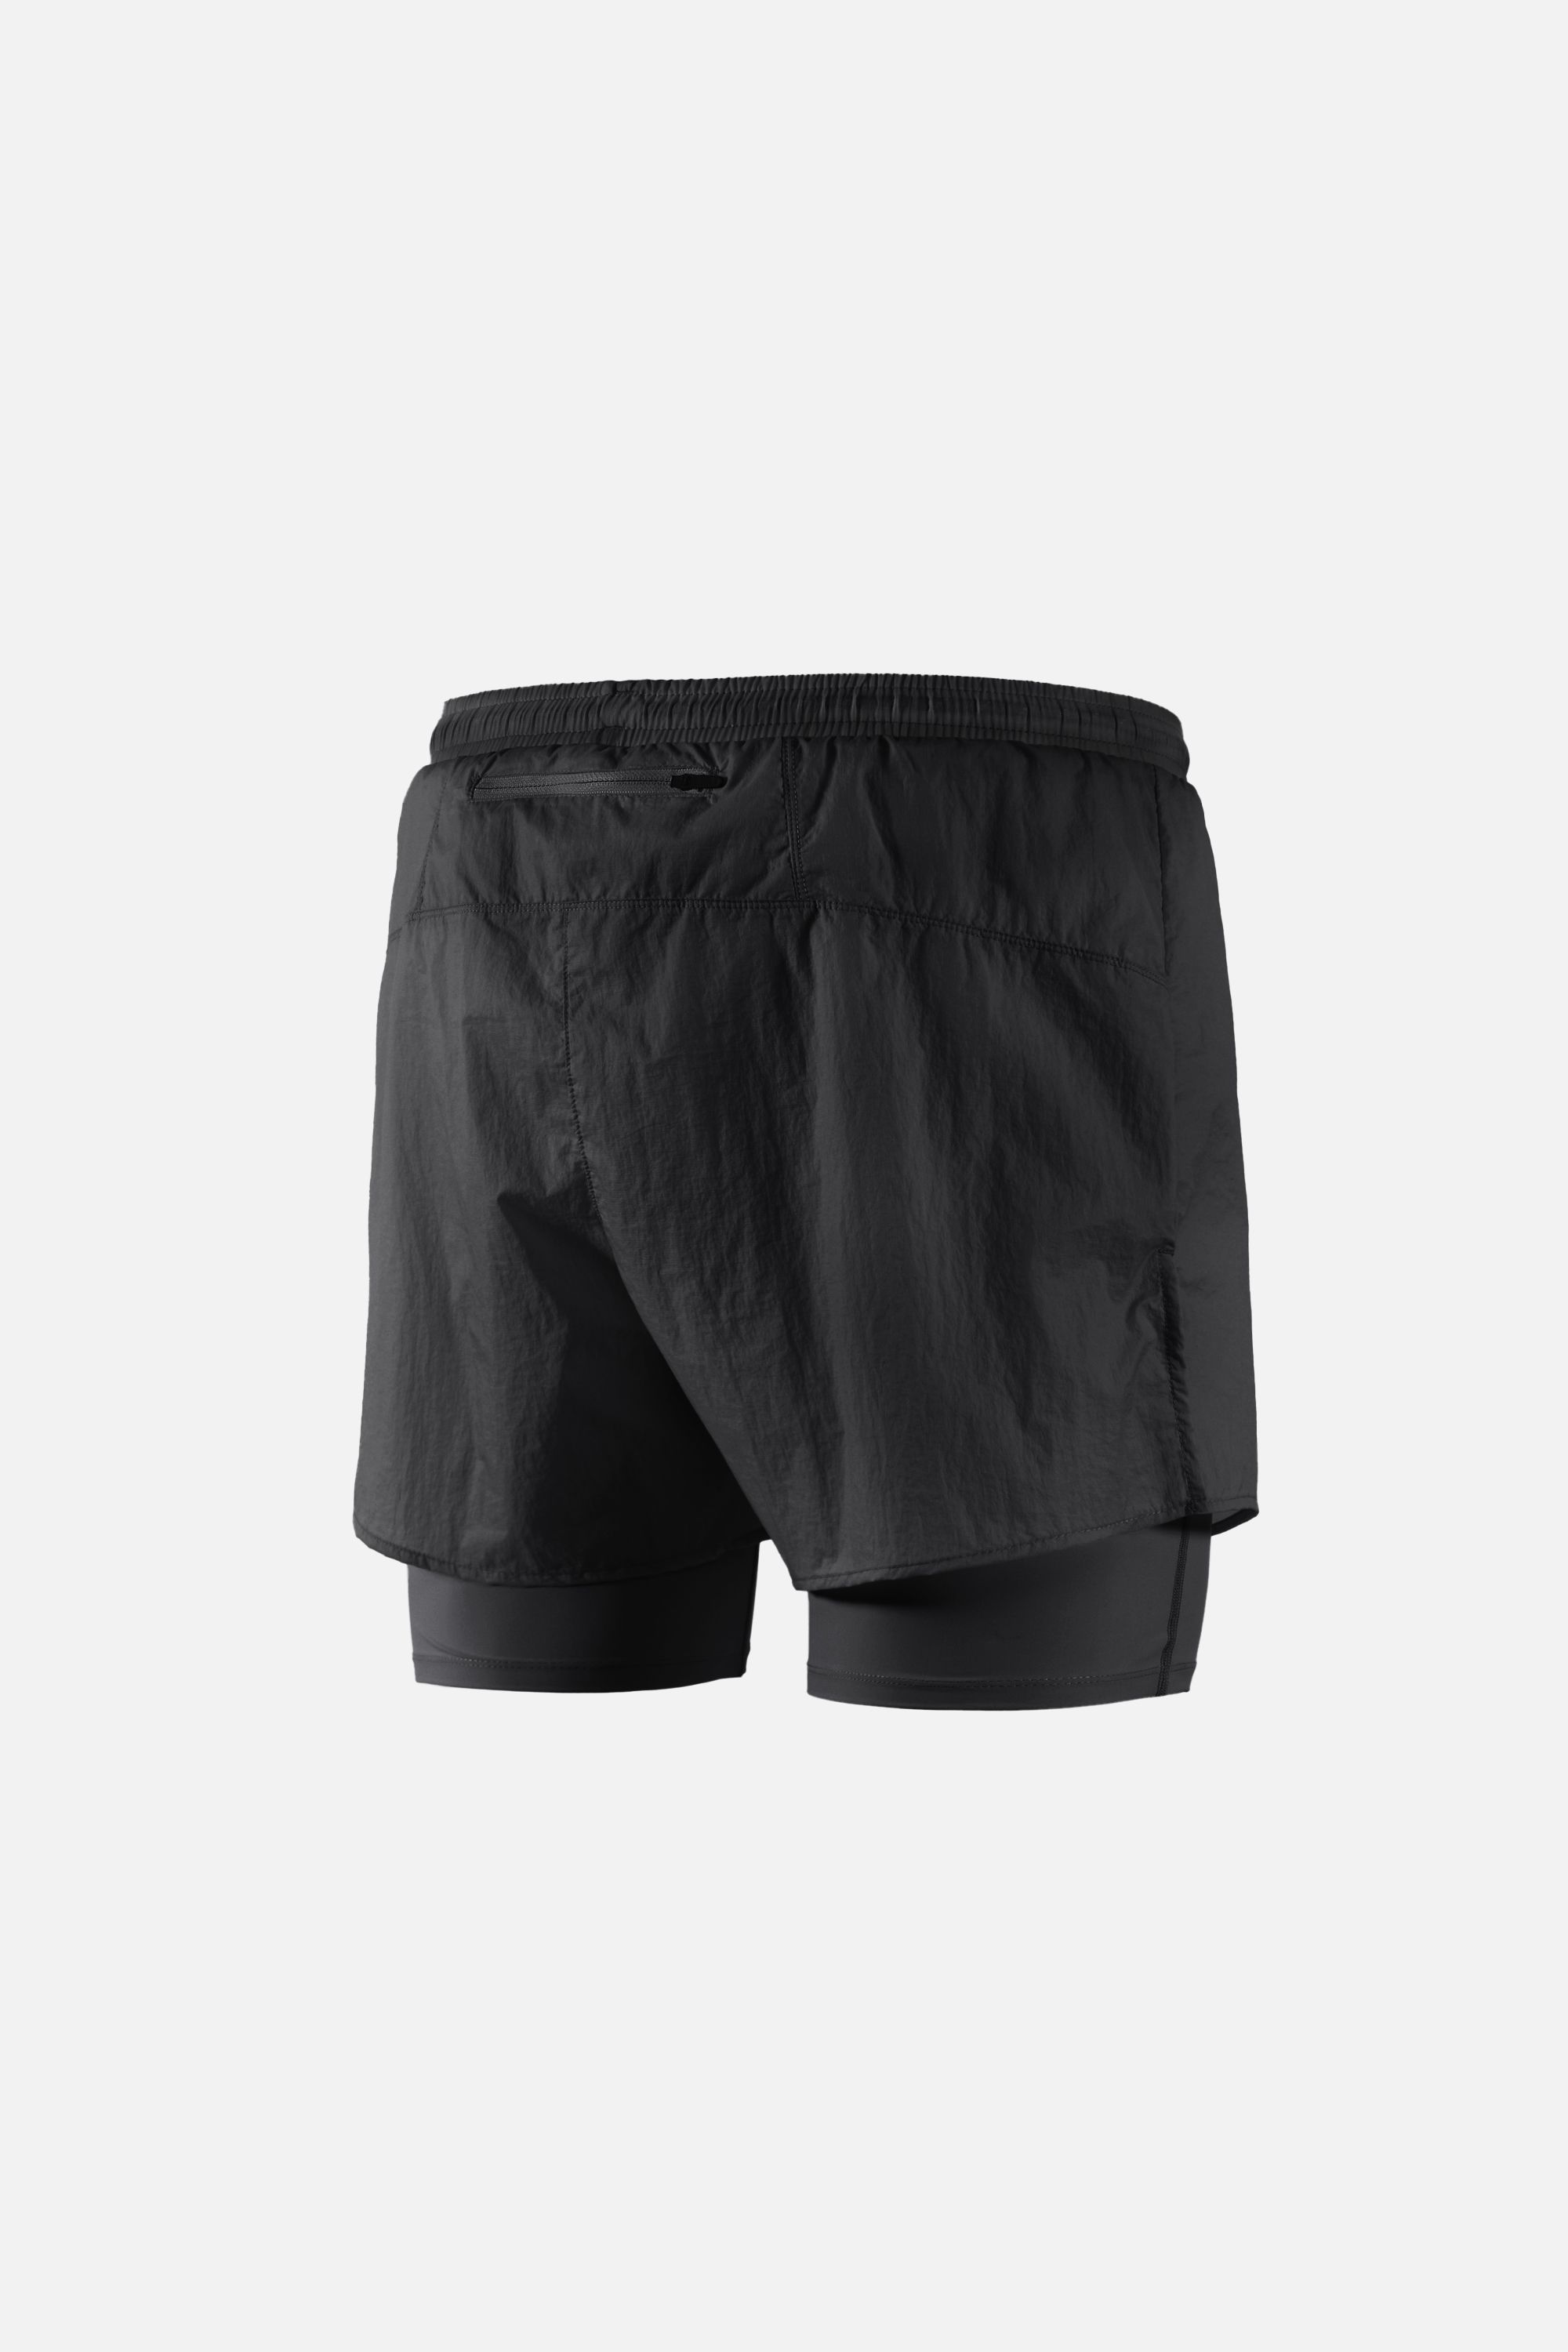 Ripstop Layered Trail Shorts, Black